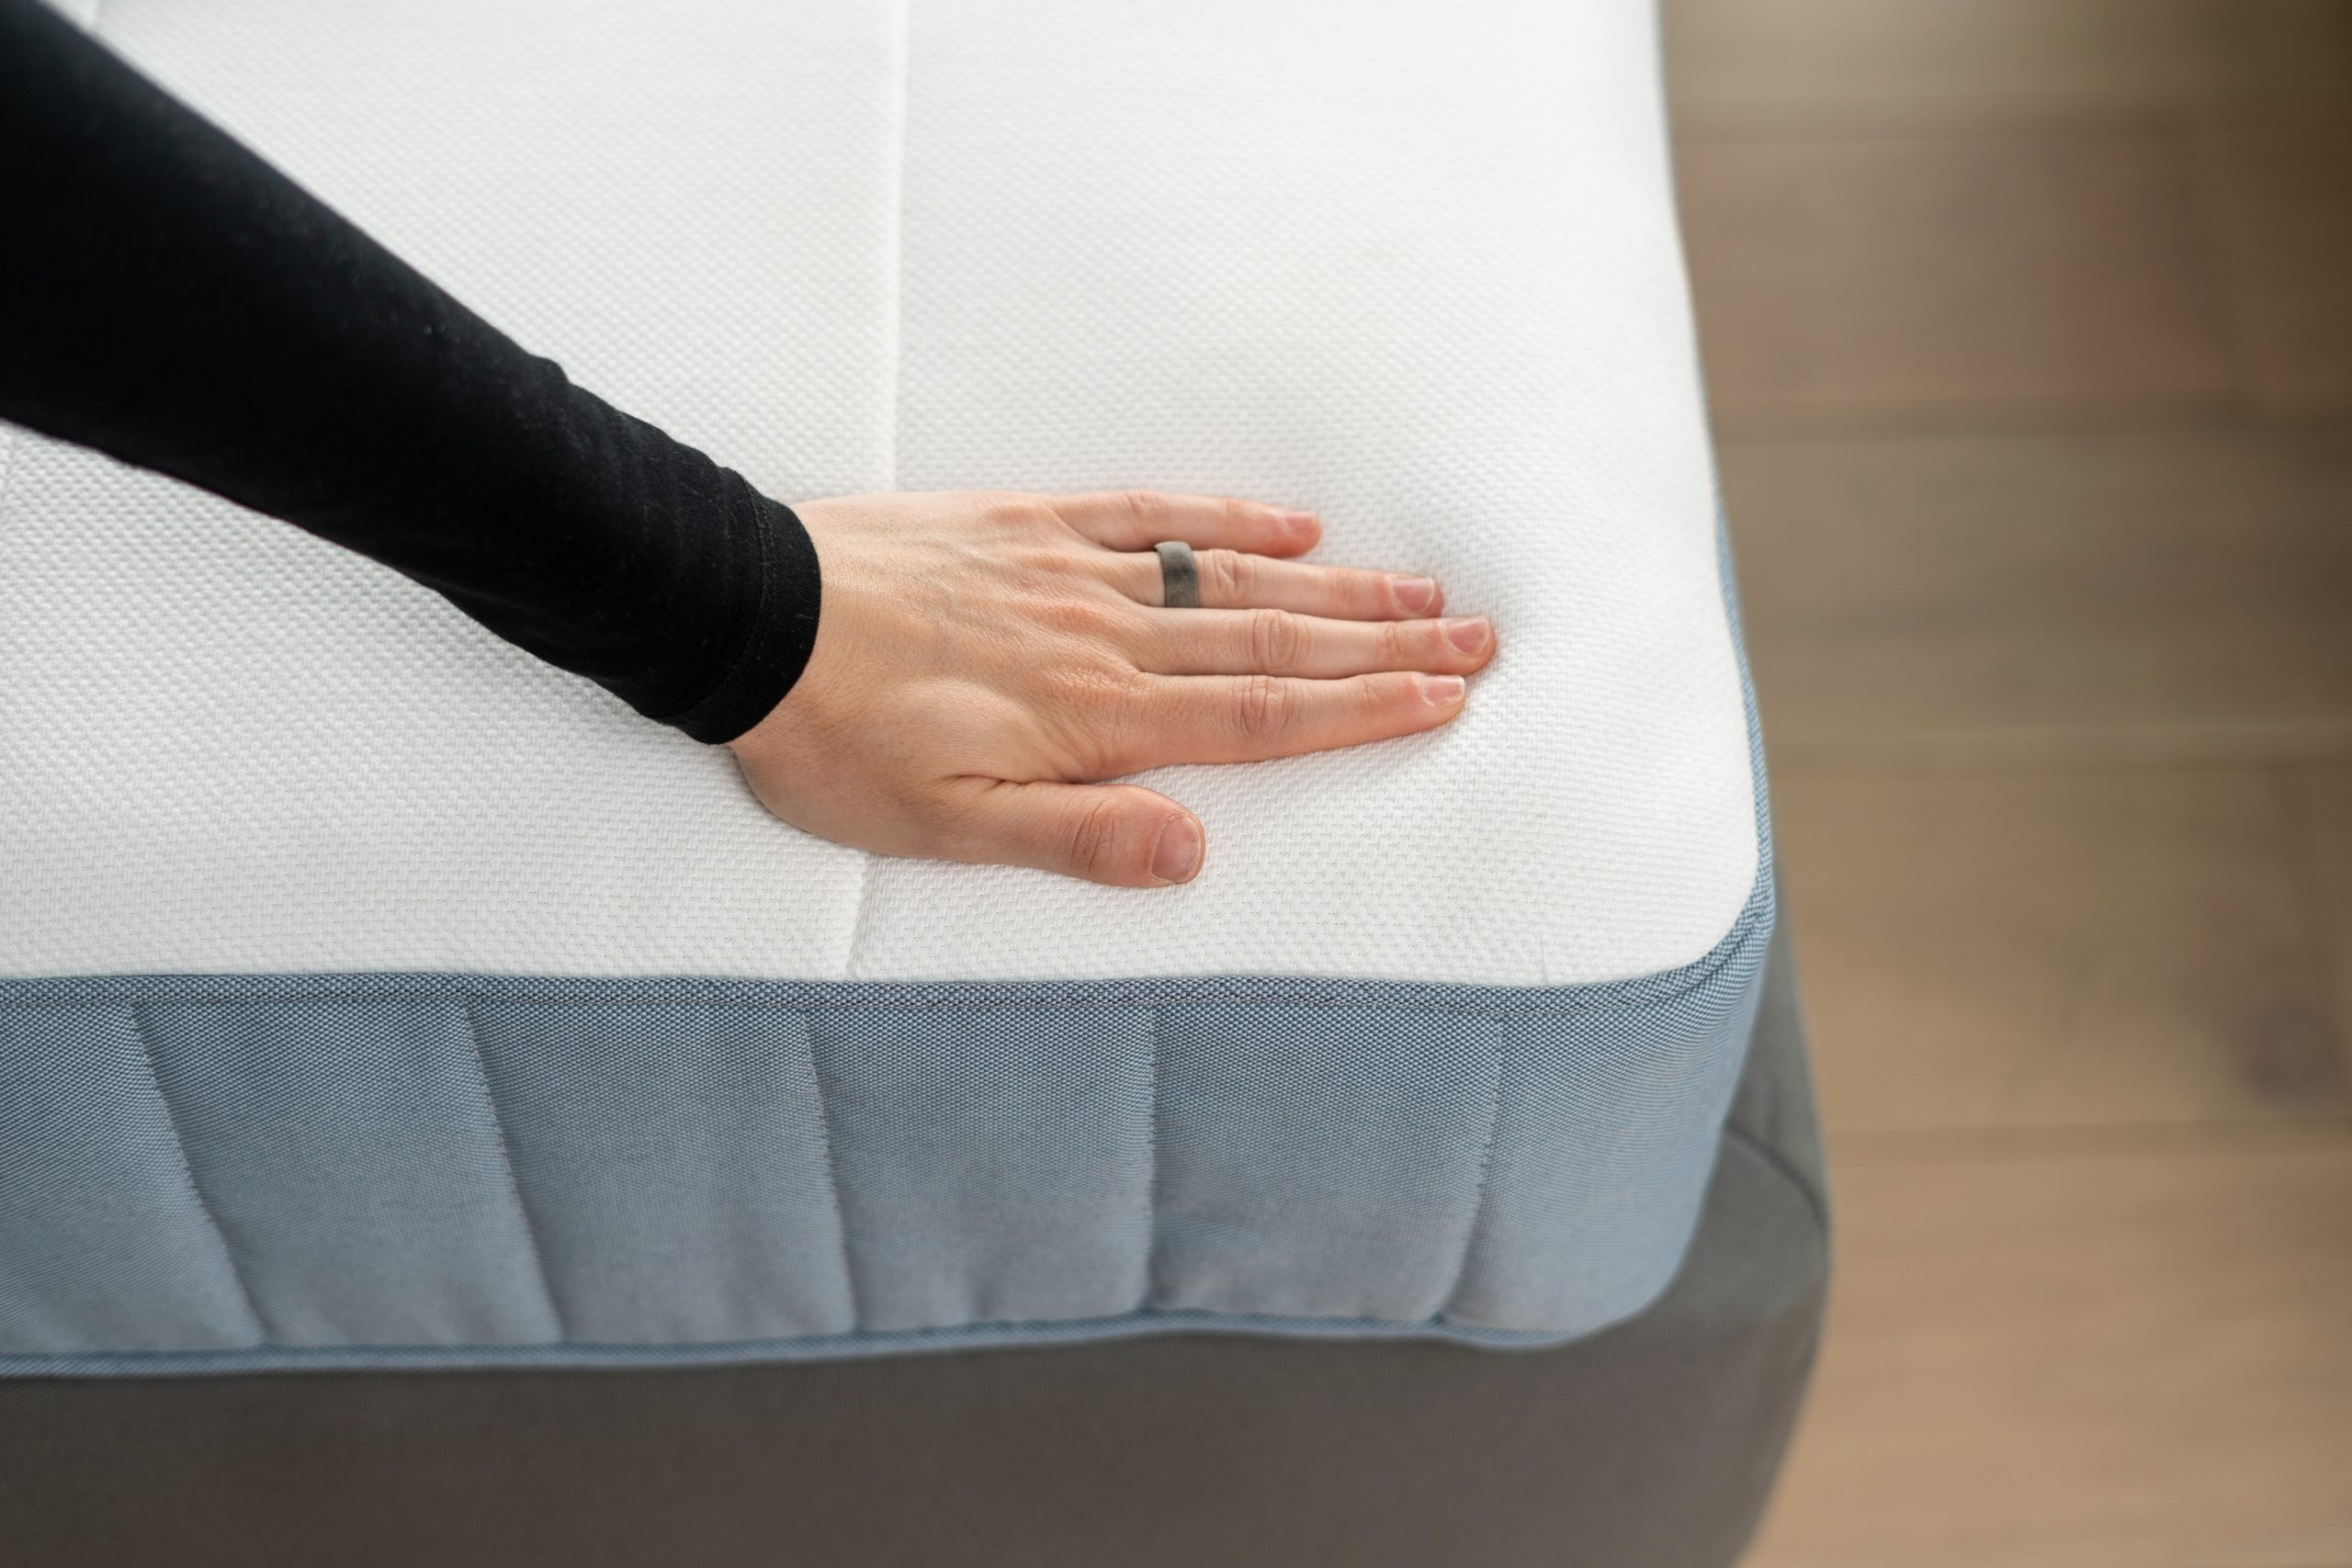 memory foam mattress health risks